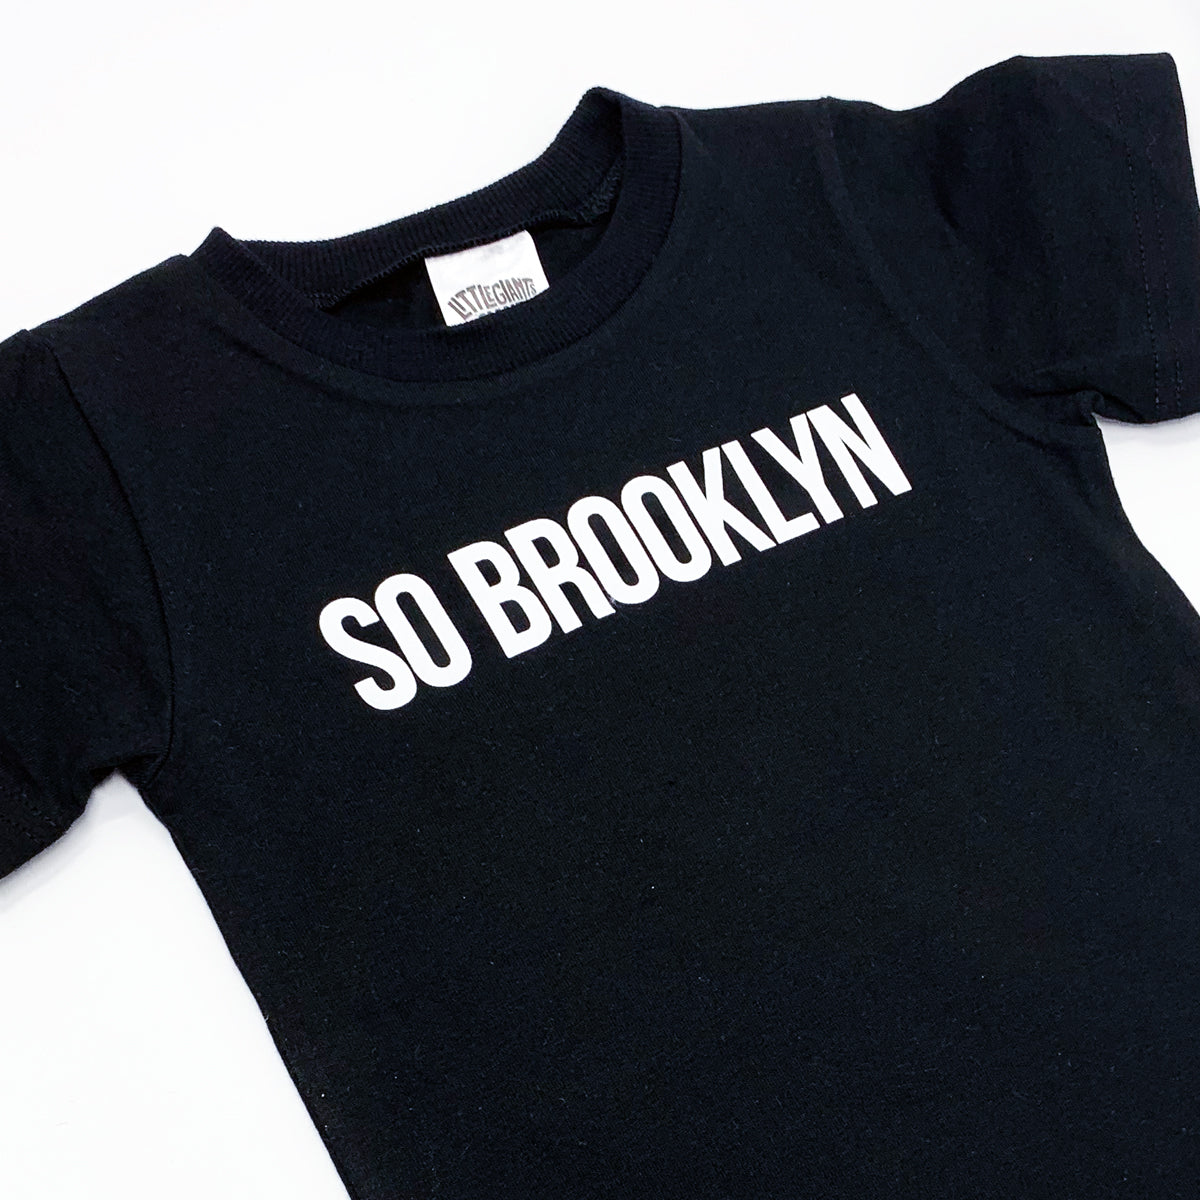 So Brooklyn T-Shirt (Black)